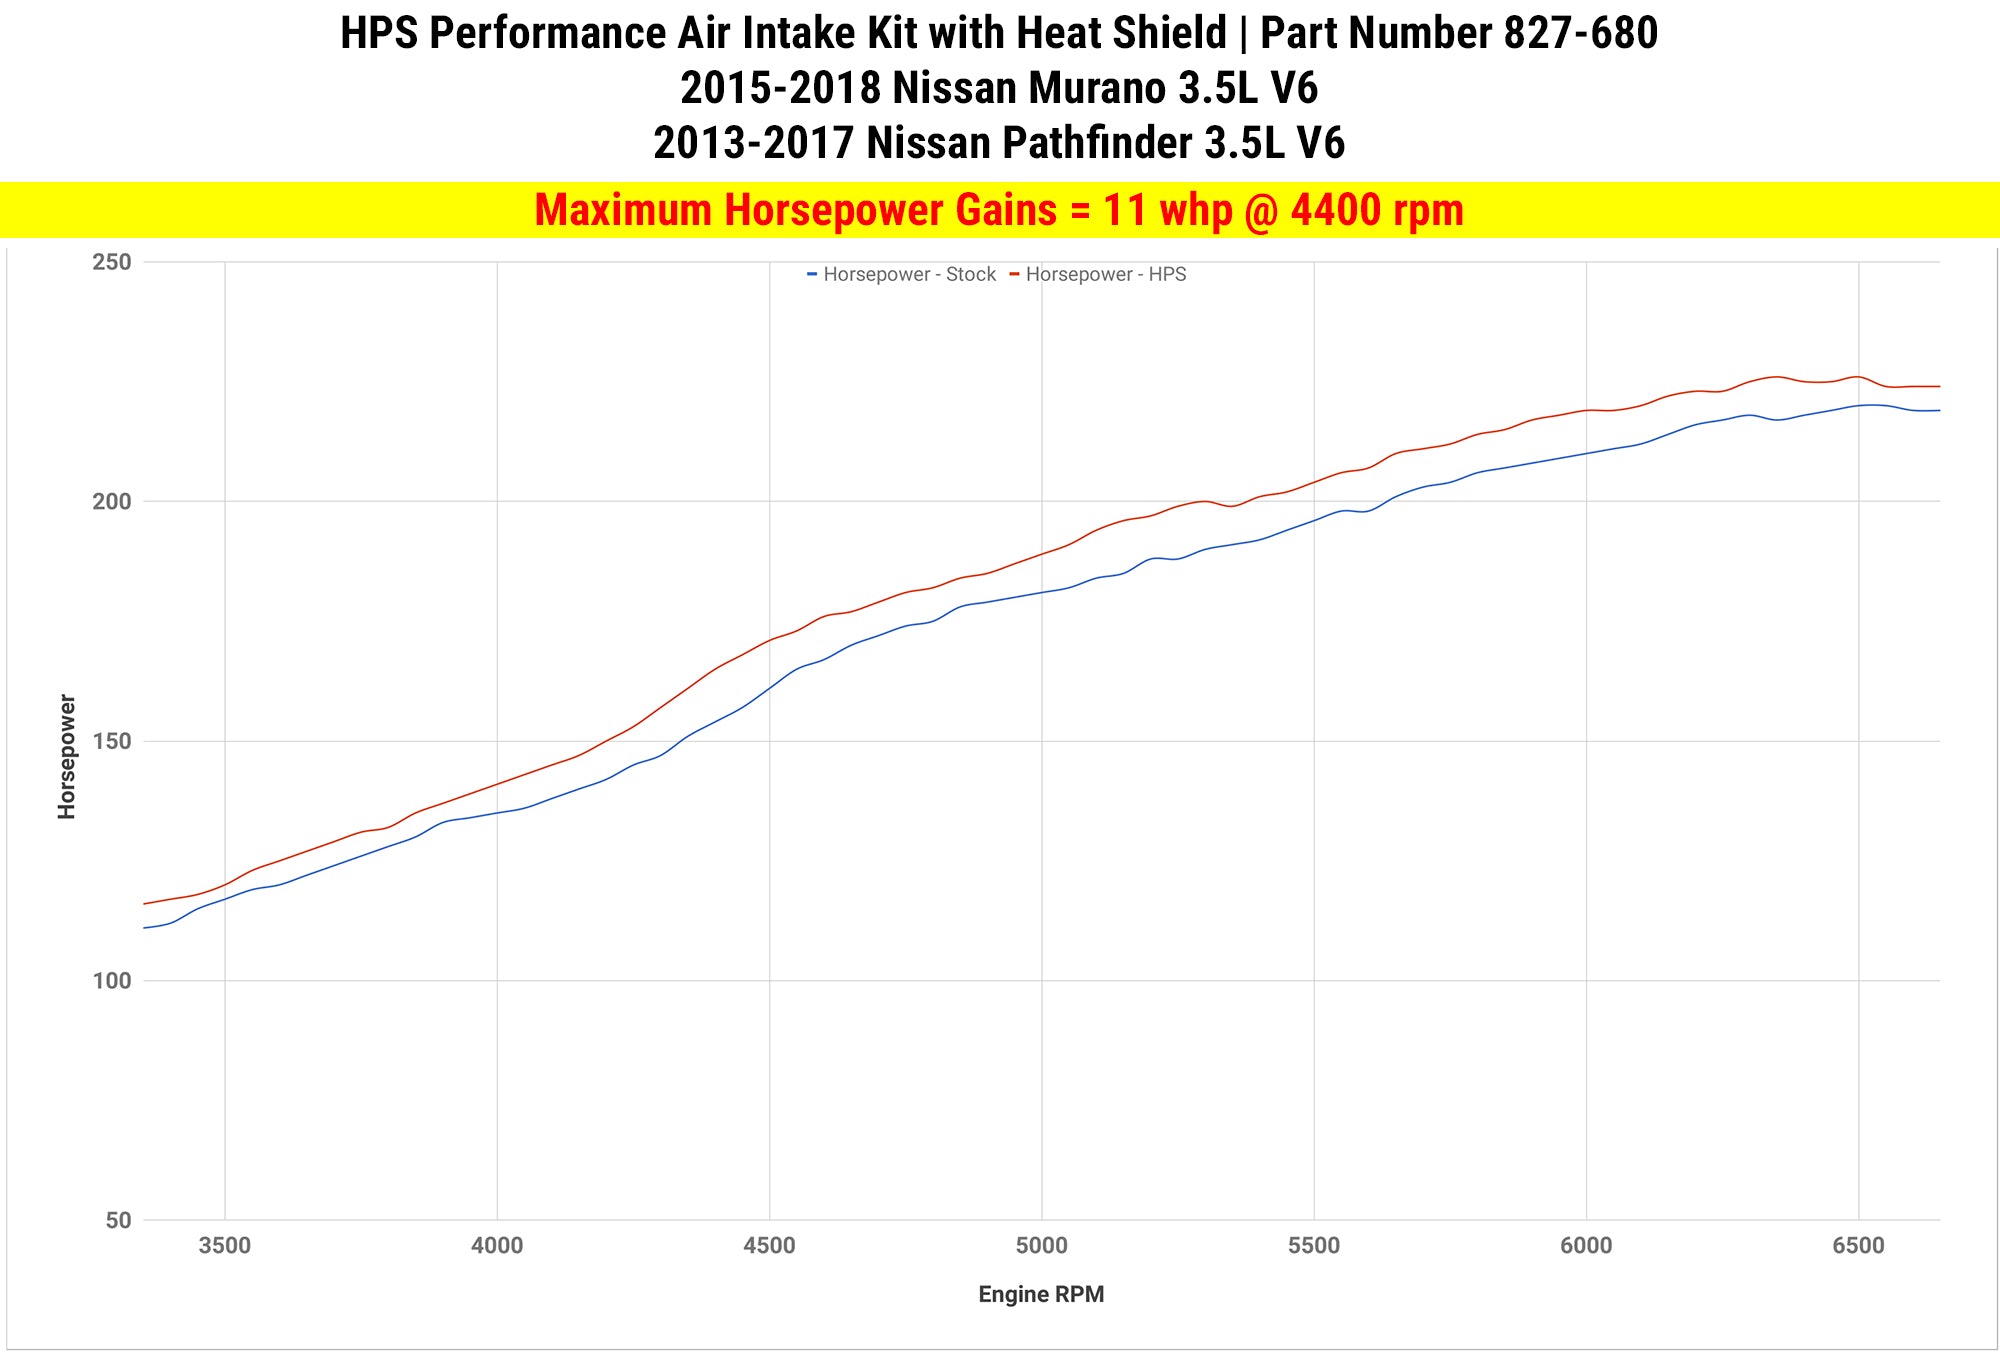 HPS Performance Shortram Air Intake Kit 2013-2017 Nissan Pathfinder 3.5L V6 827-680WB